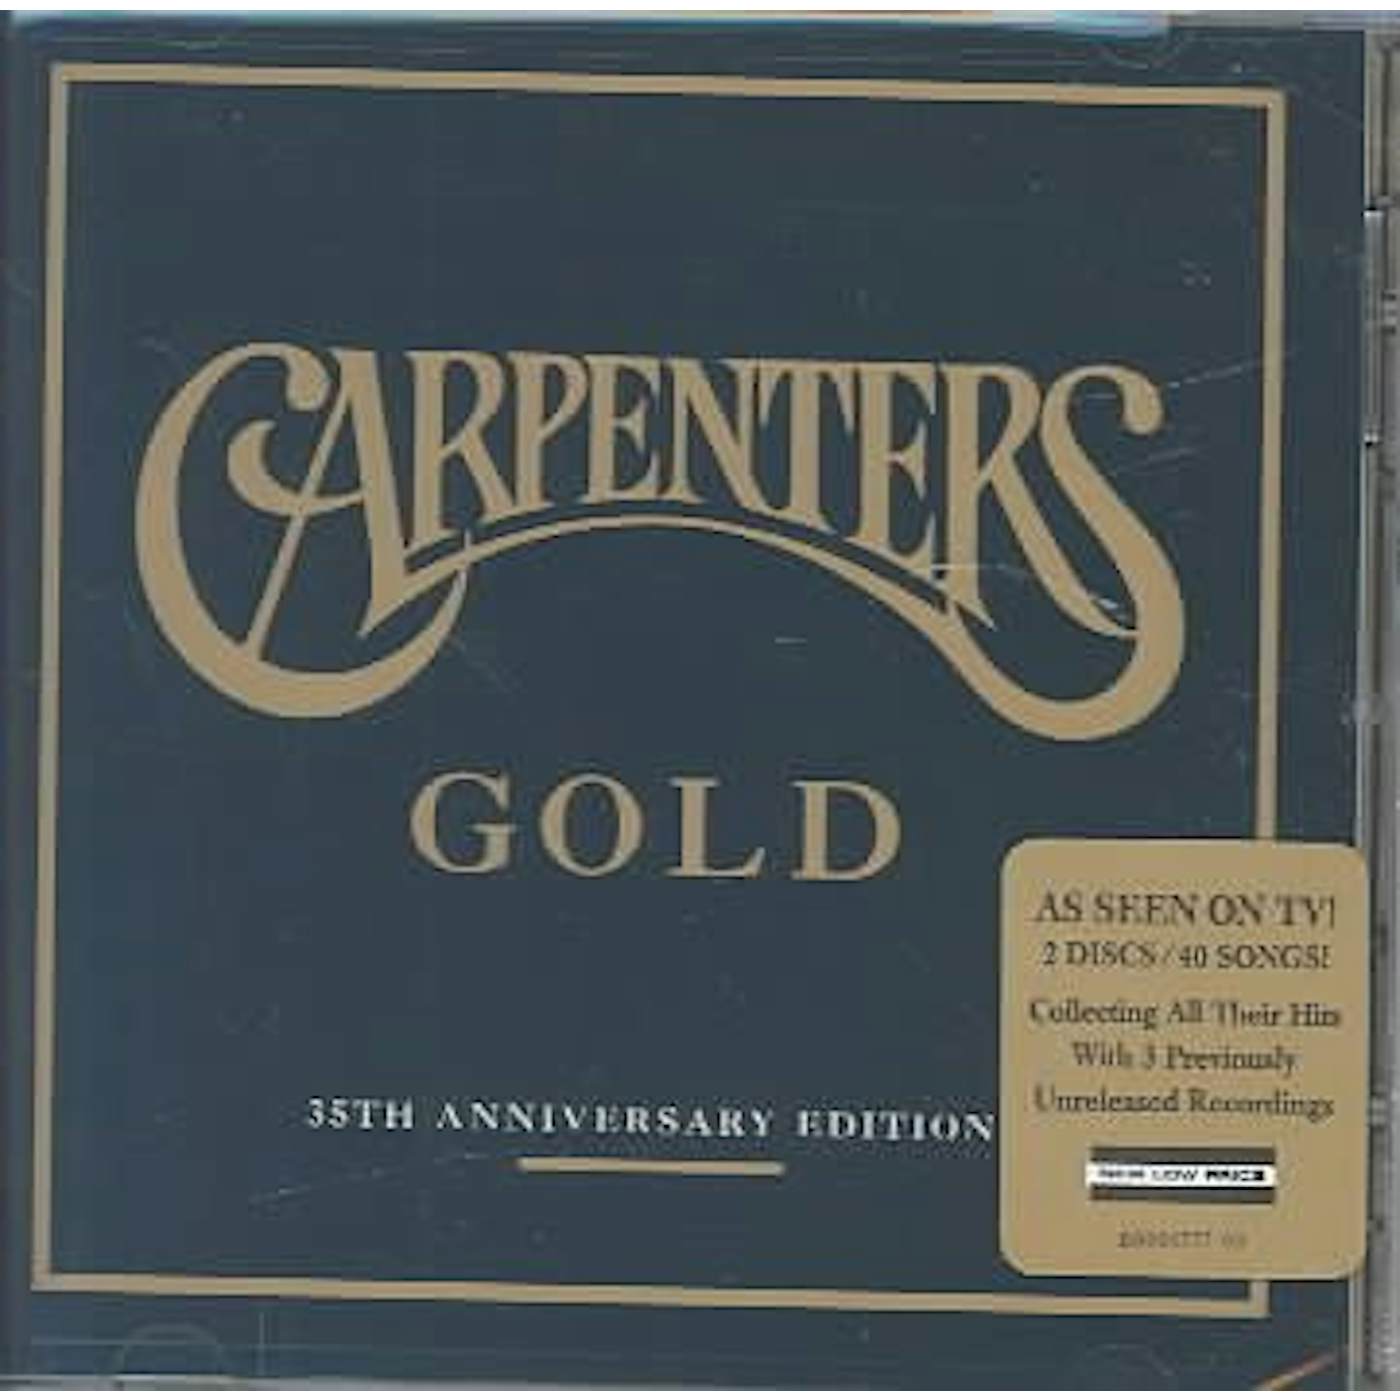 CARPENTERS GOLD (35TH ANNIVERSARY EDITION) CD